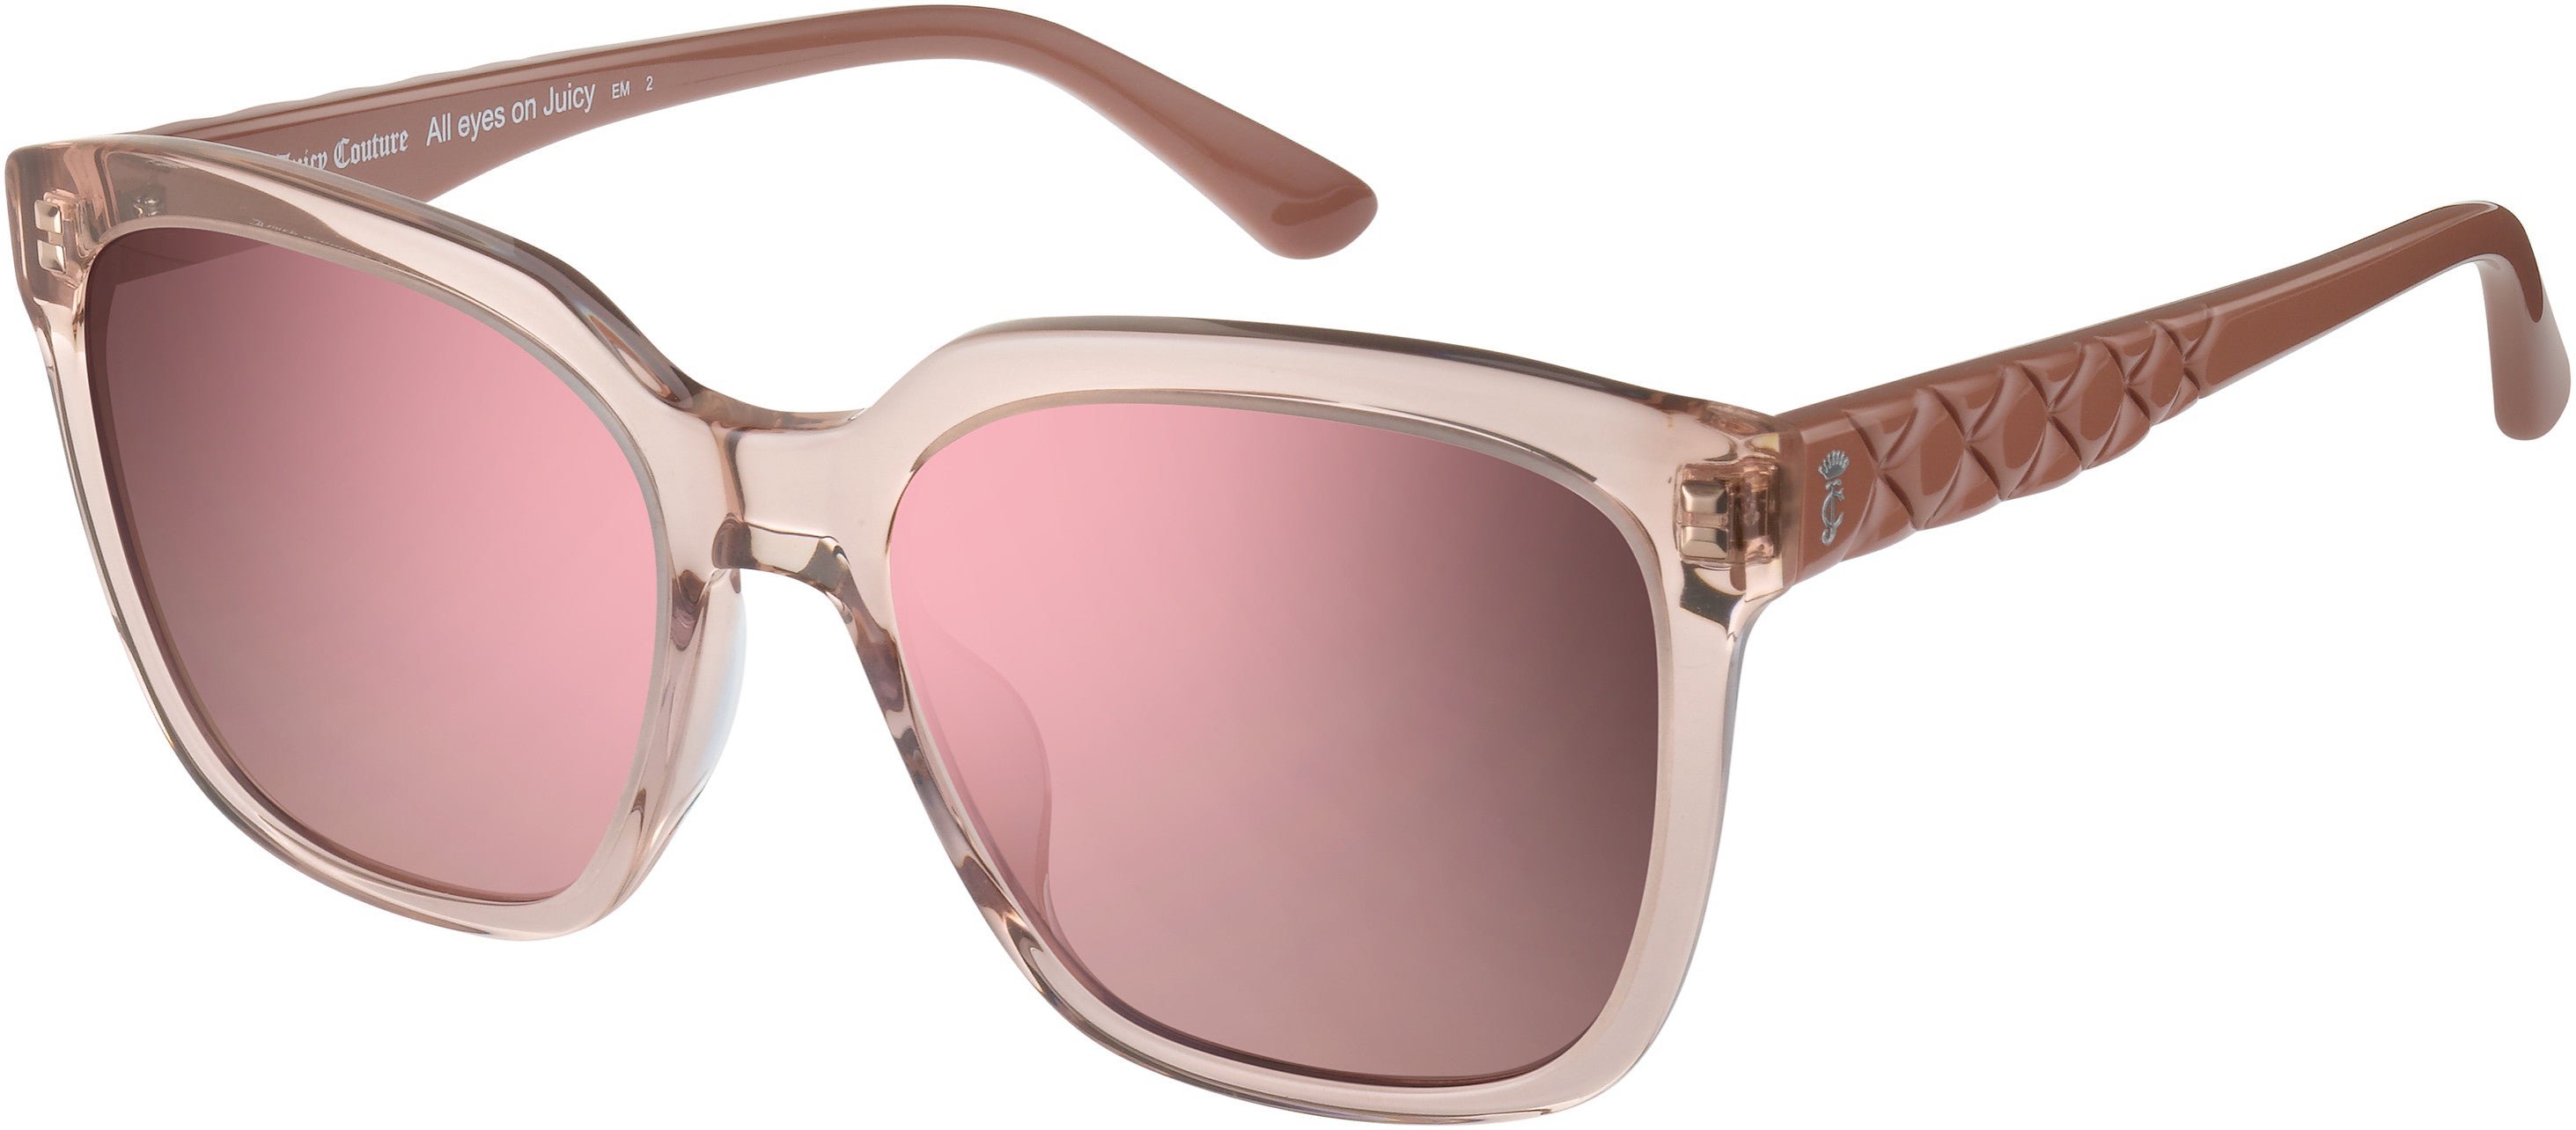 Juicy Couture Juicy 602/S Rectangular Sunglasses 035J-035J  Pink (0J Rose Gold Ml)